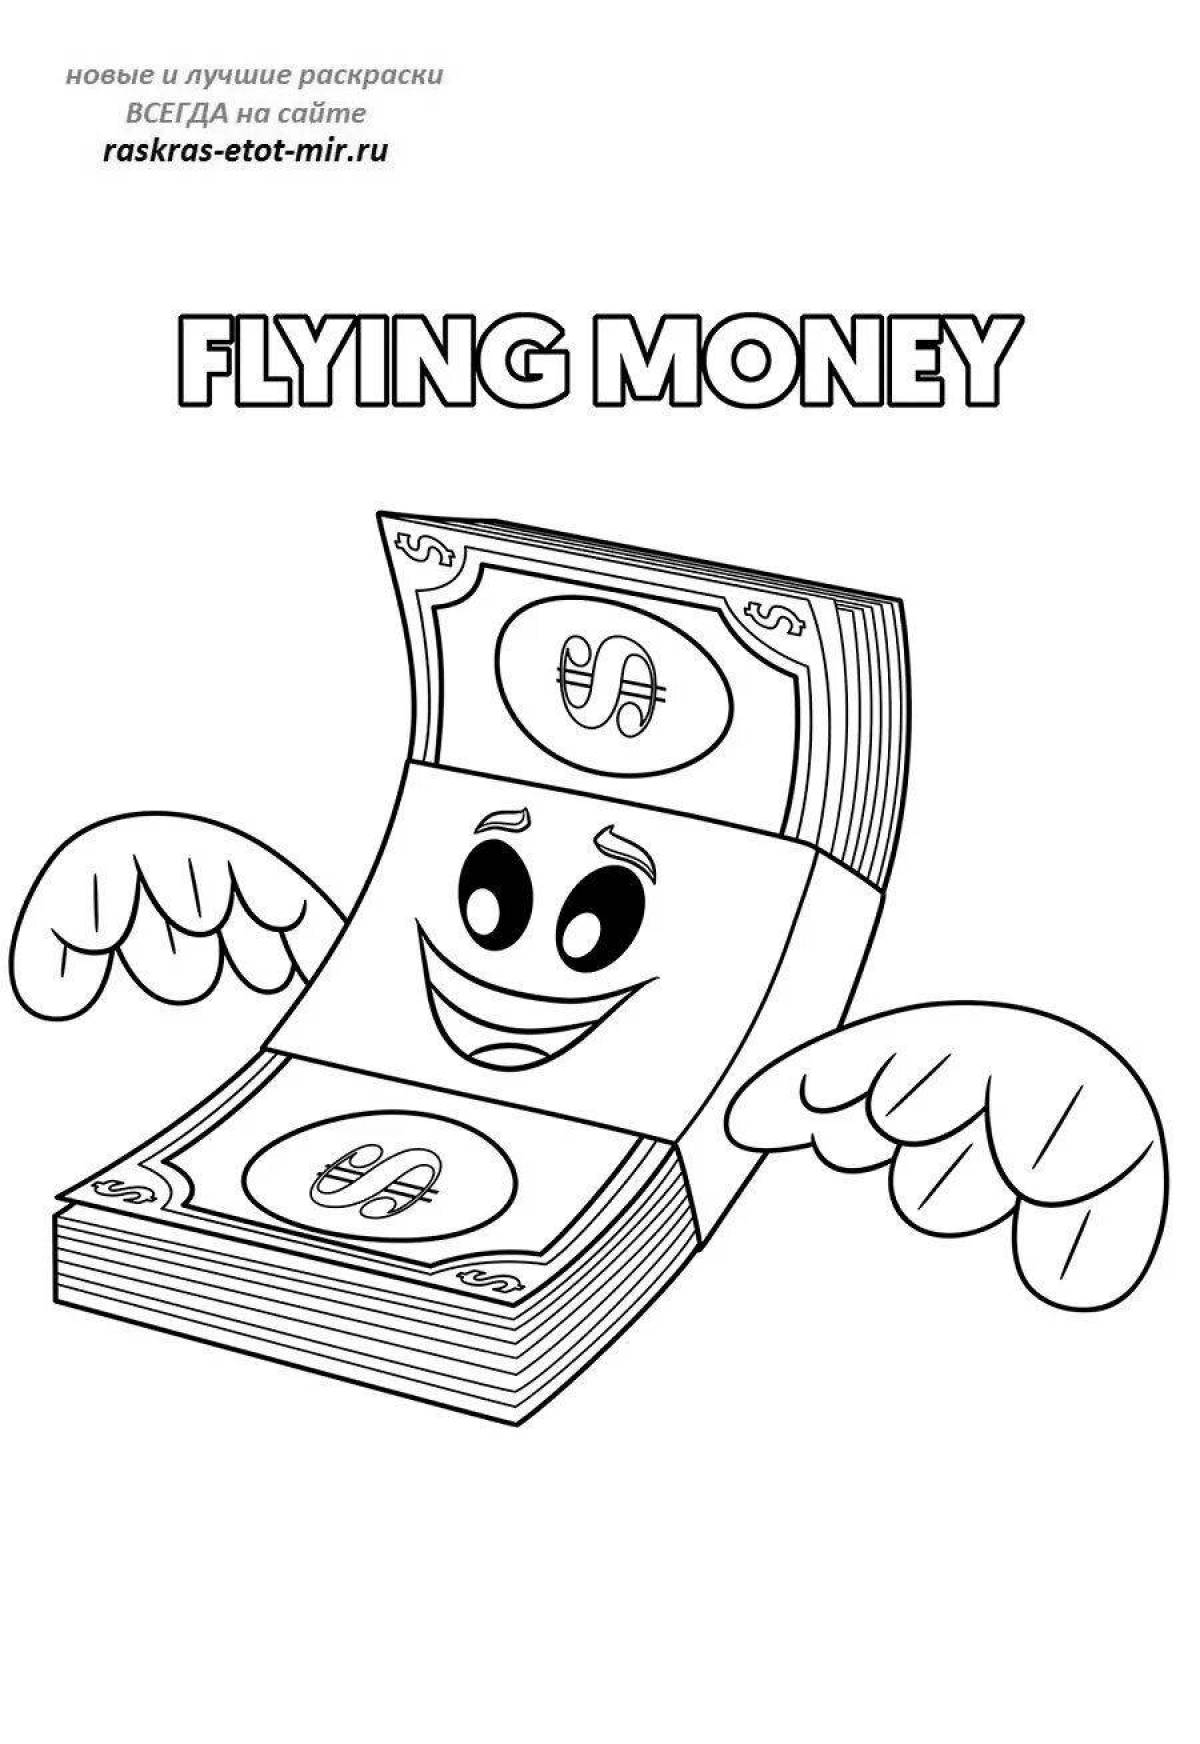 Joyful coloring of money